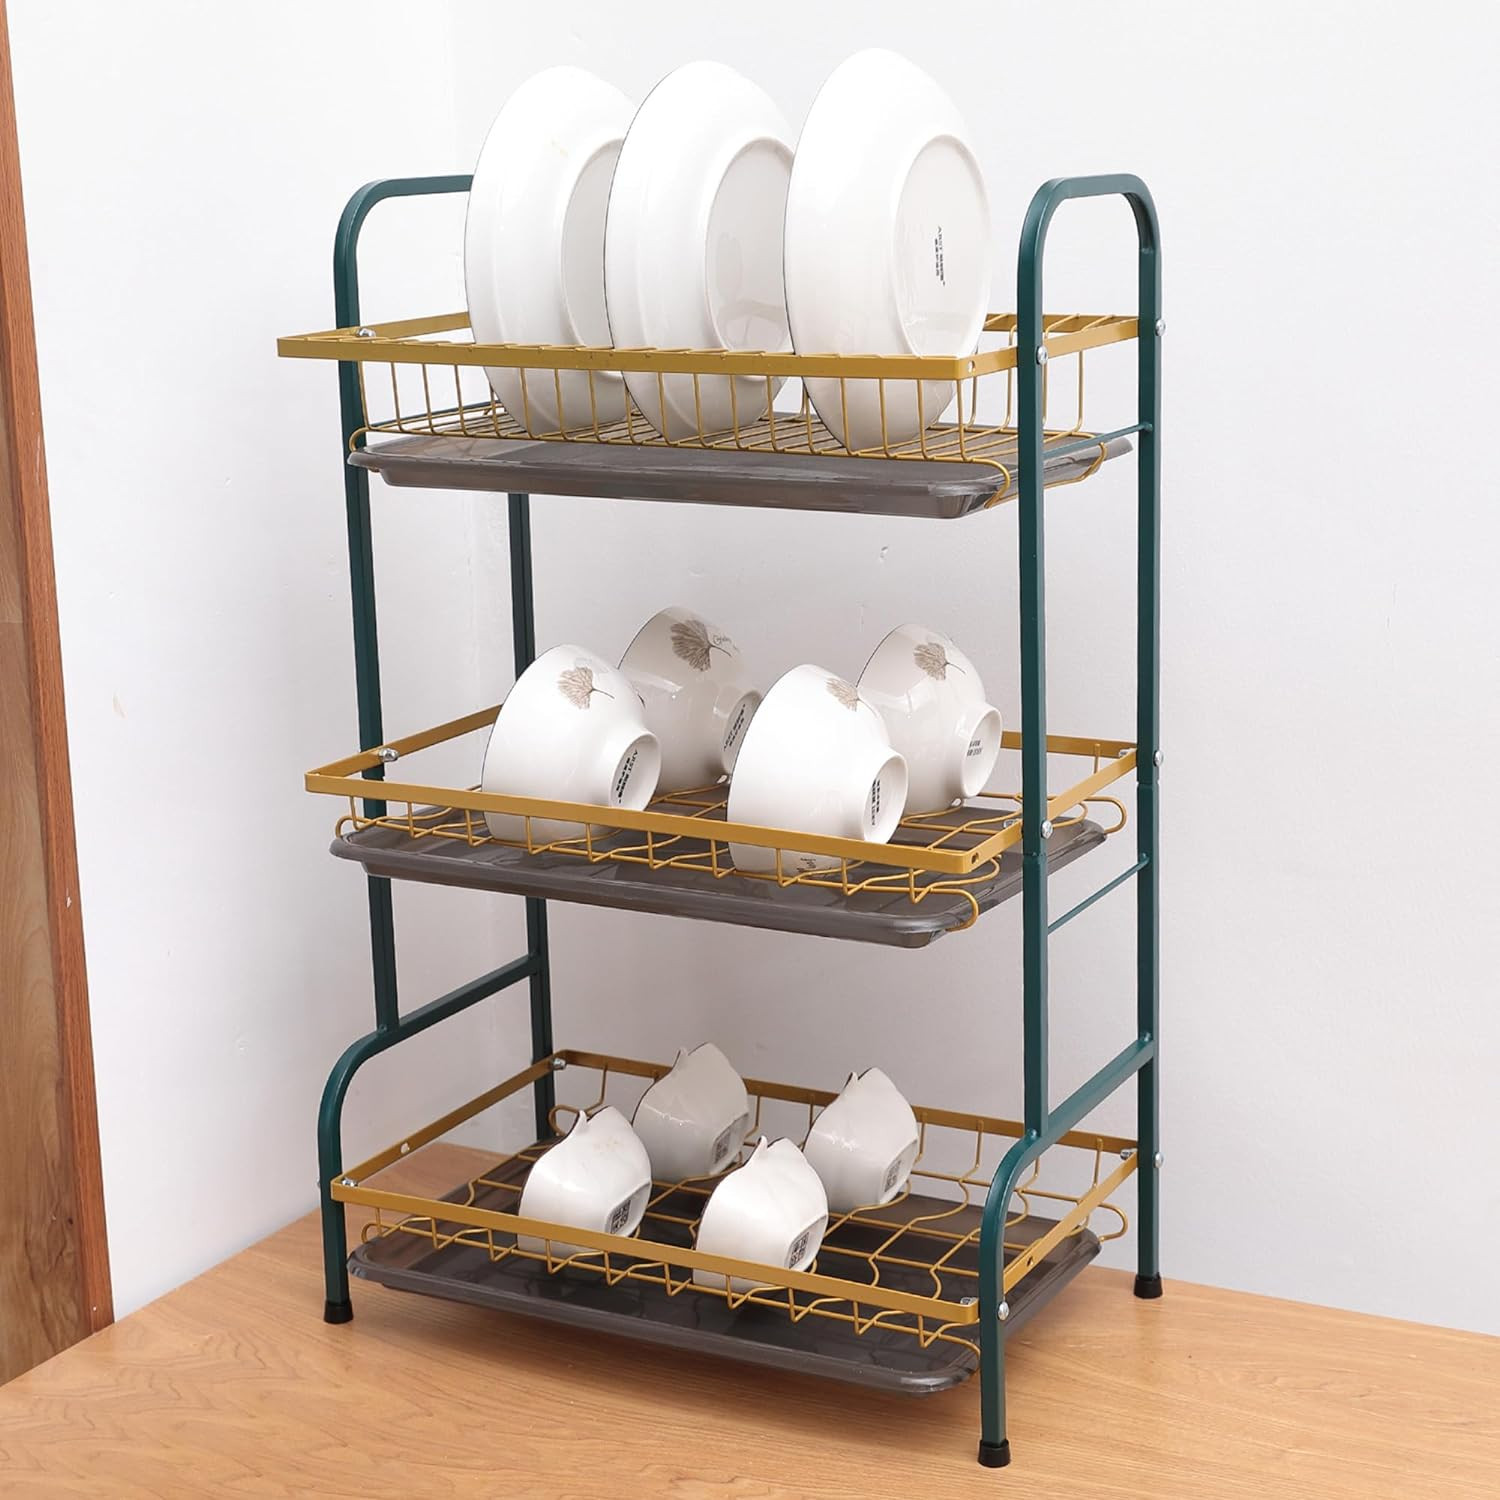 Kuber Industries 3-Layer Dish Drying Rack|Storage Rack for Kitchen Counter|Drainboard & Cutting Board Holder|Premium Utensils Basket (Dark Green & Gold)